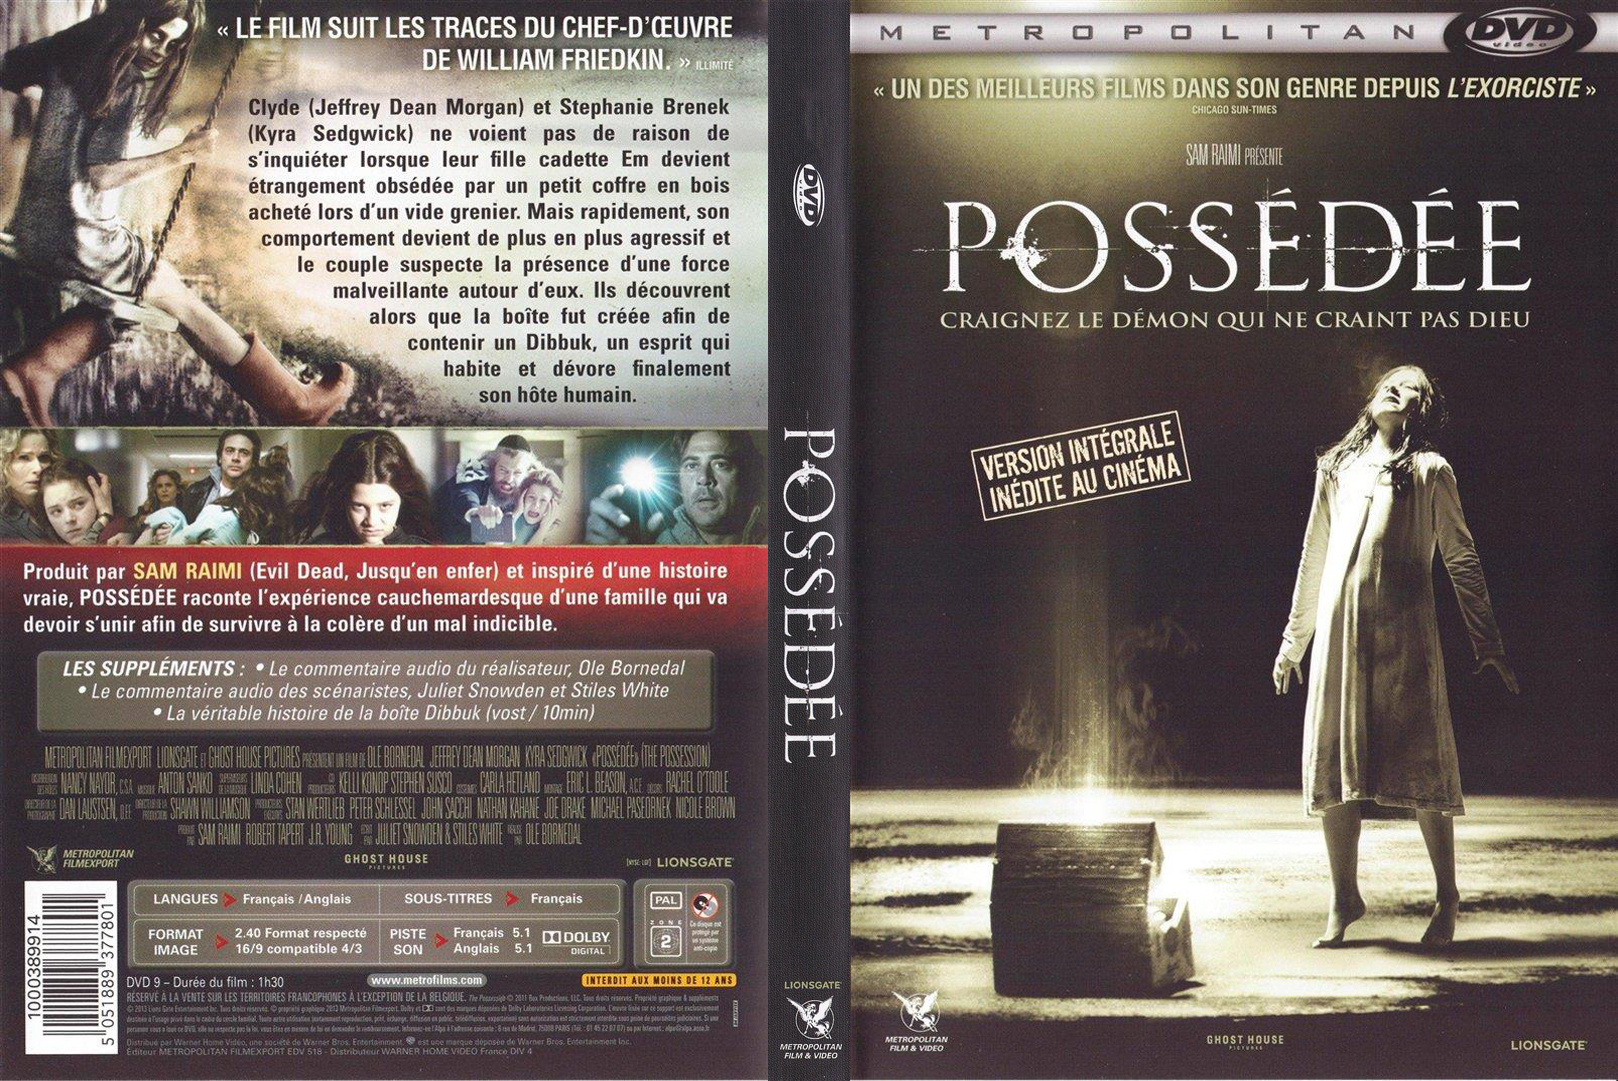 Jaquette DVD Possede (2012) custom v3